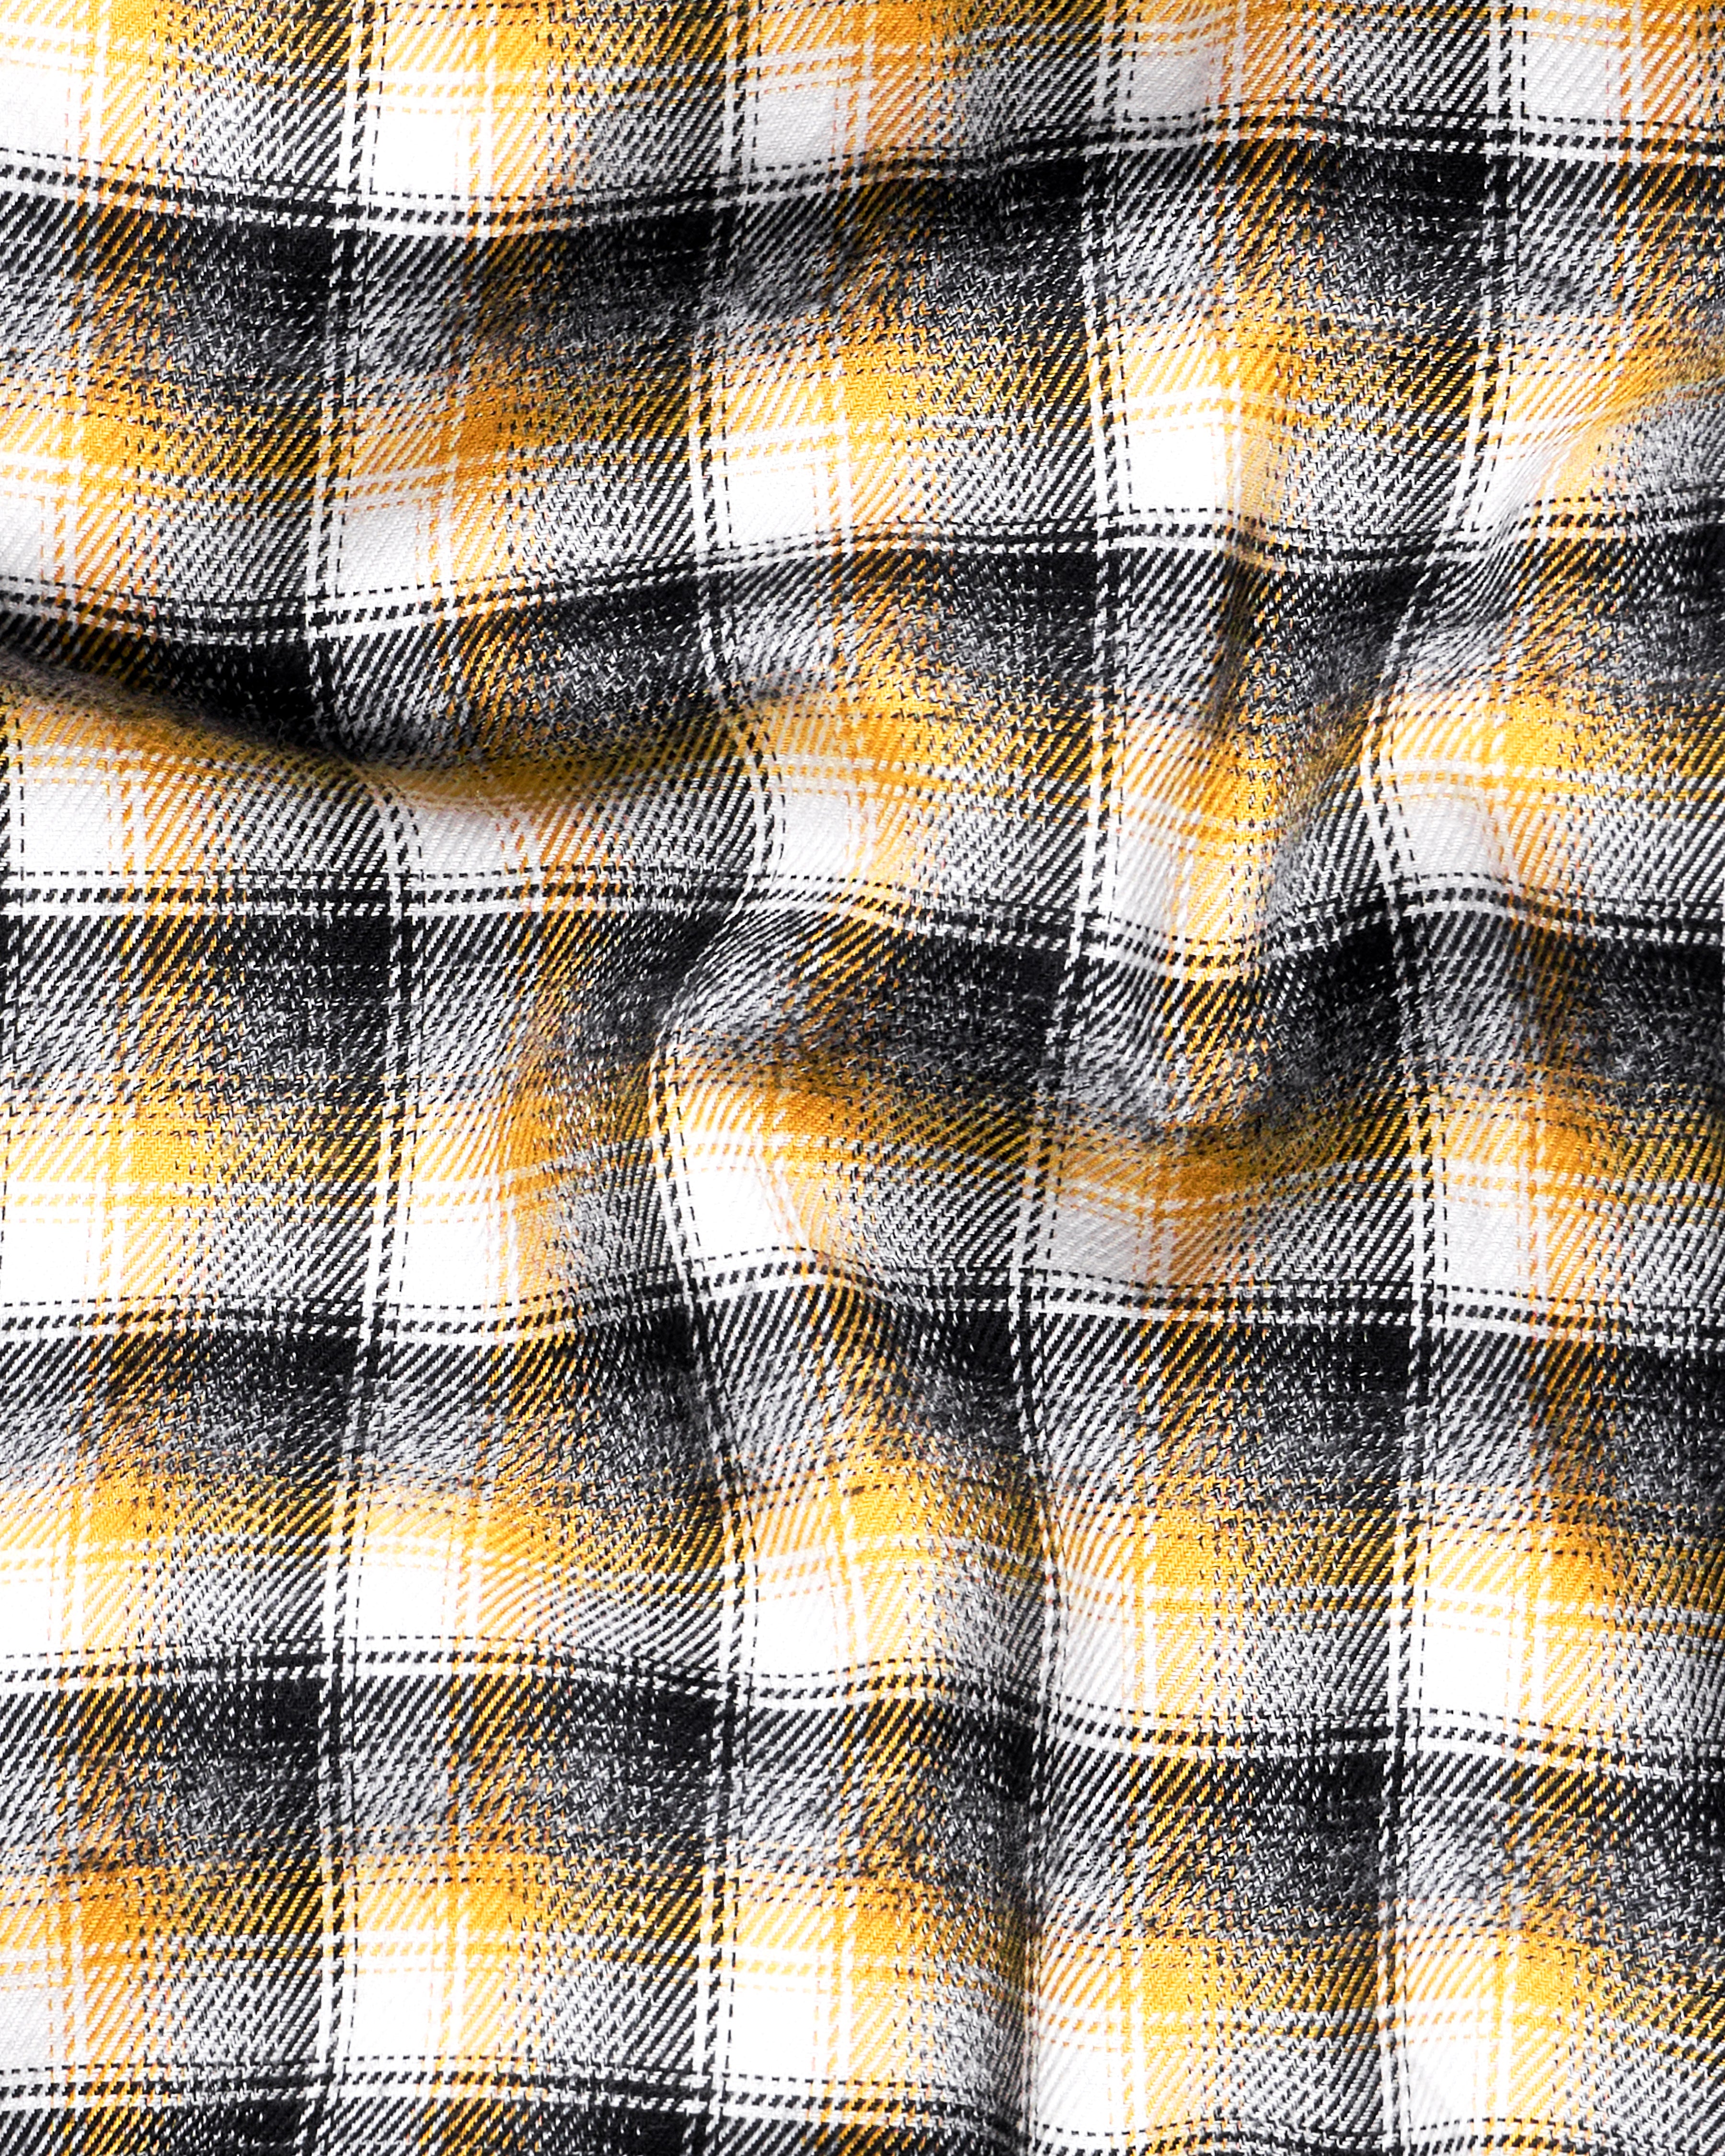 Mirage Black with Mikado Yellow Checkered Printed Twill Premium Cotton Designer Shirt